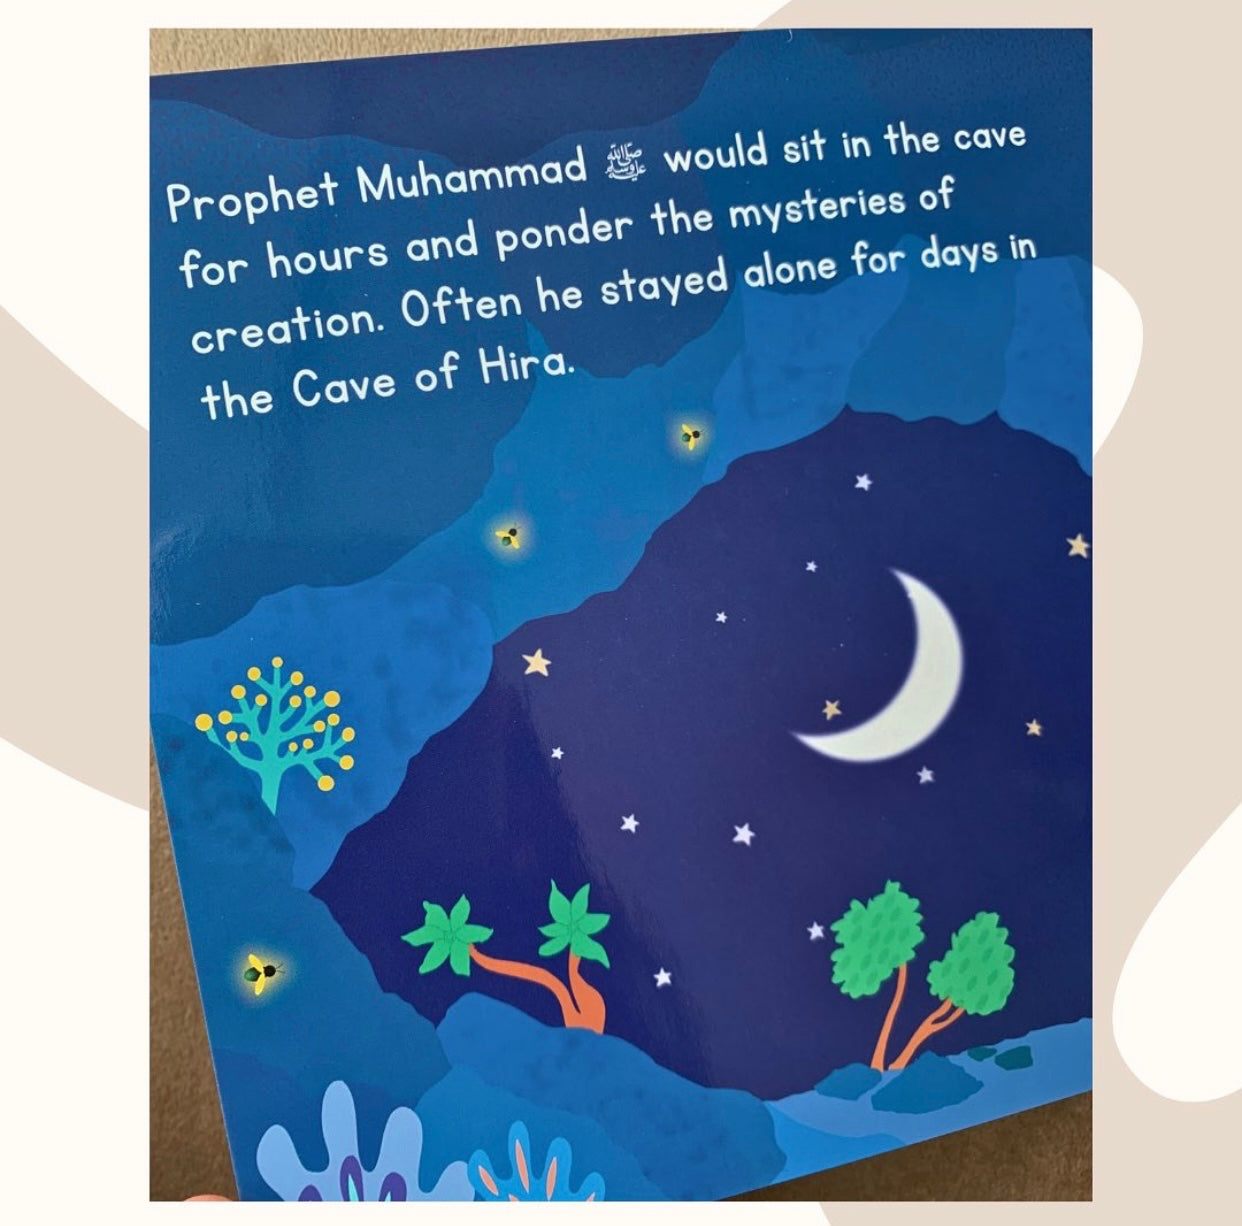 Prophet Muhammad, The Messenger of Allah